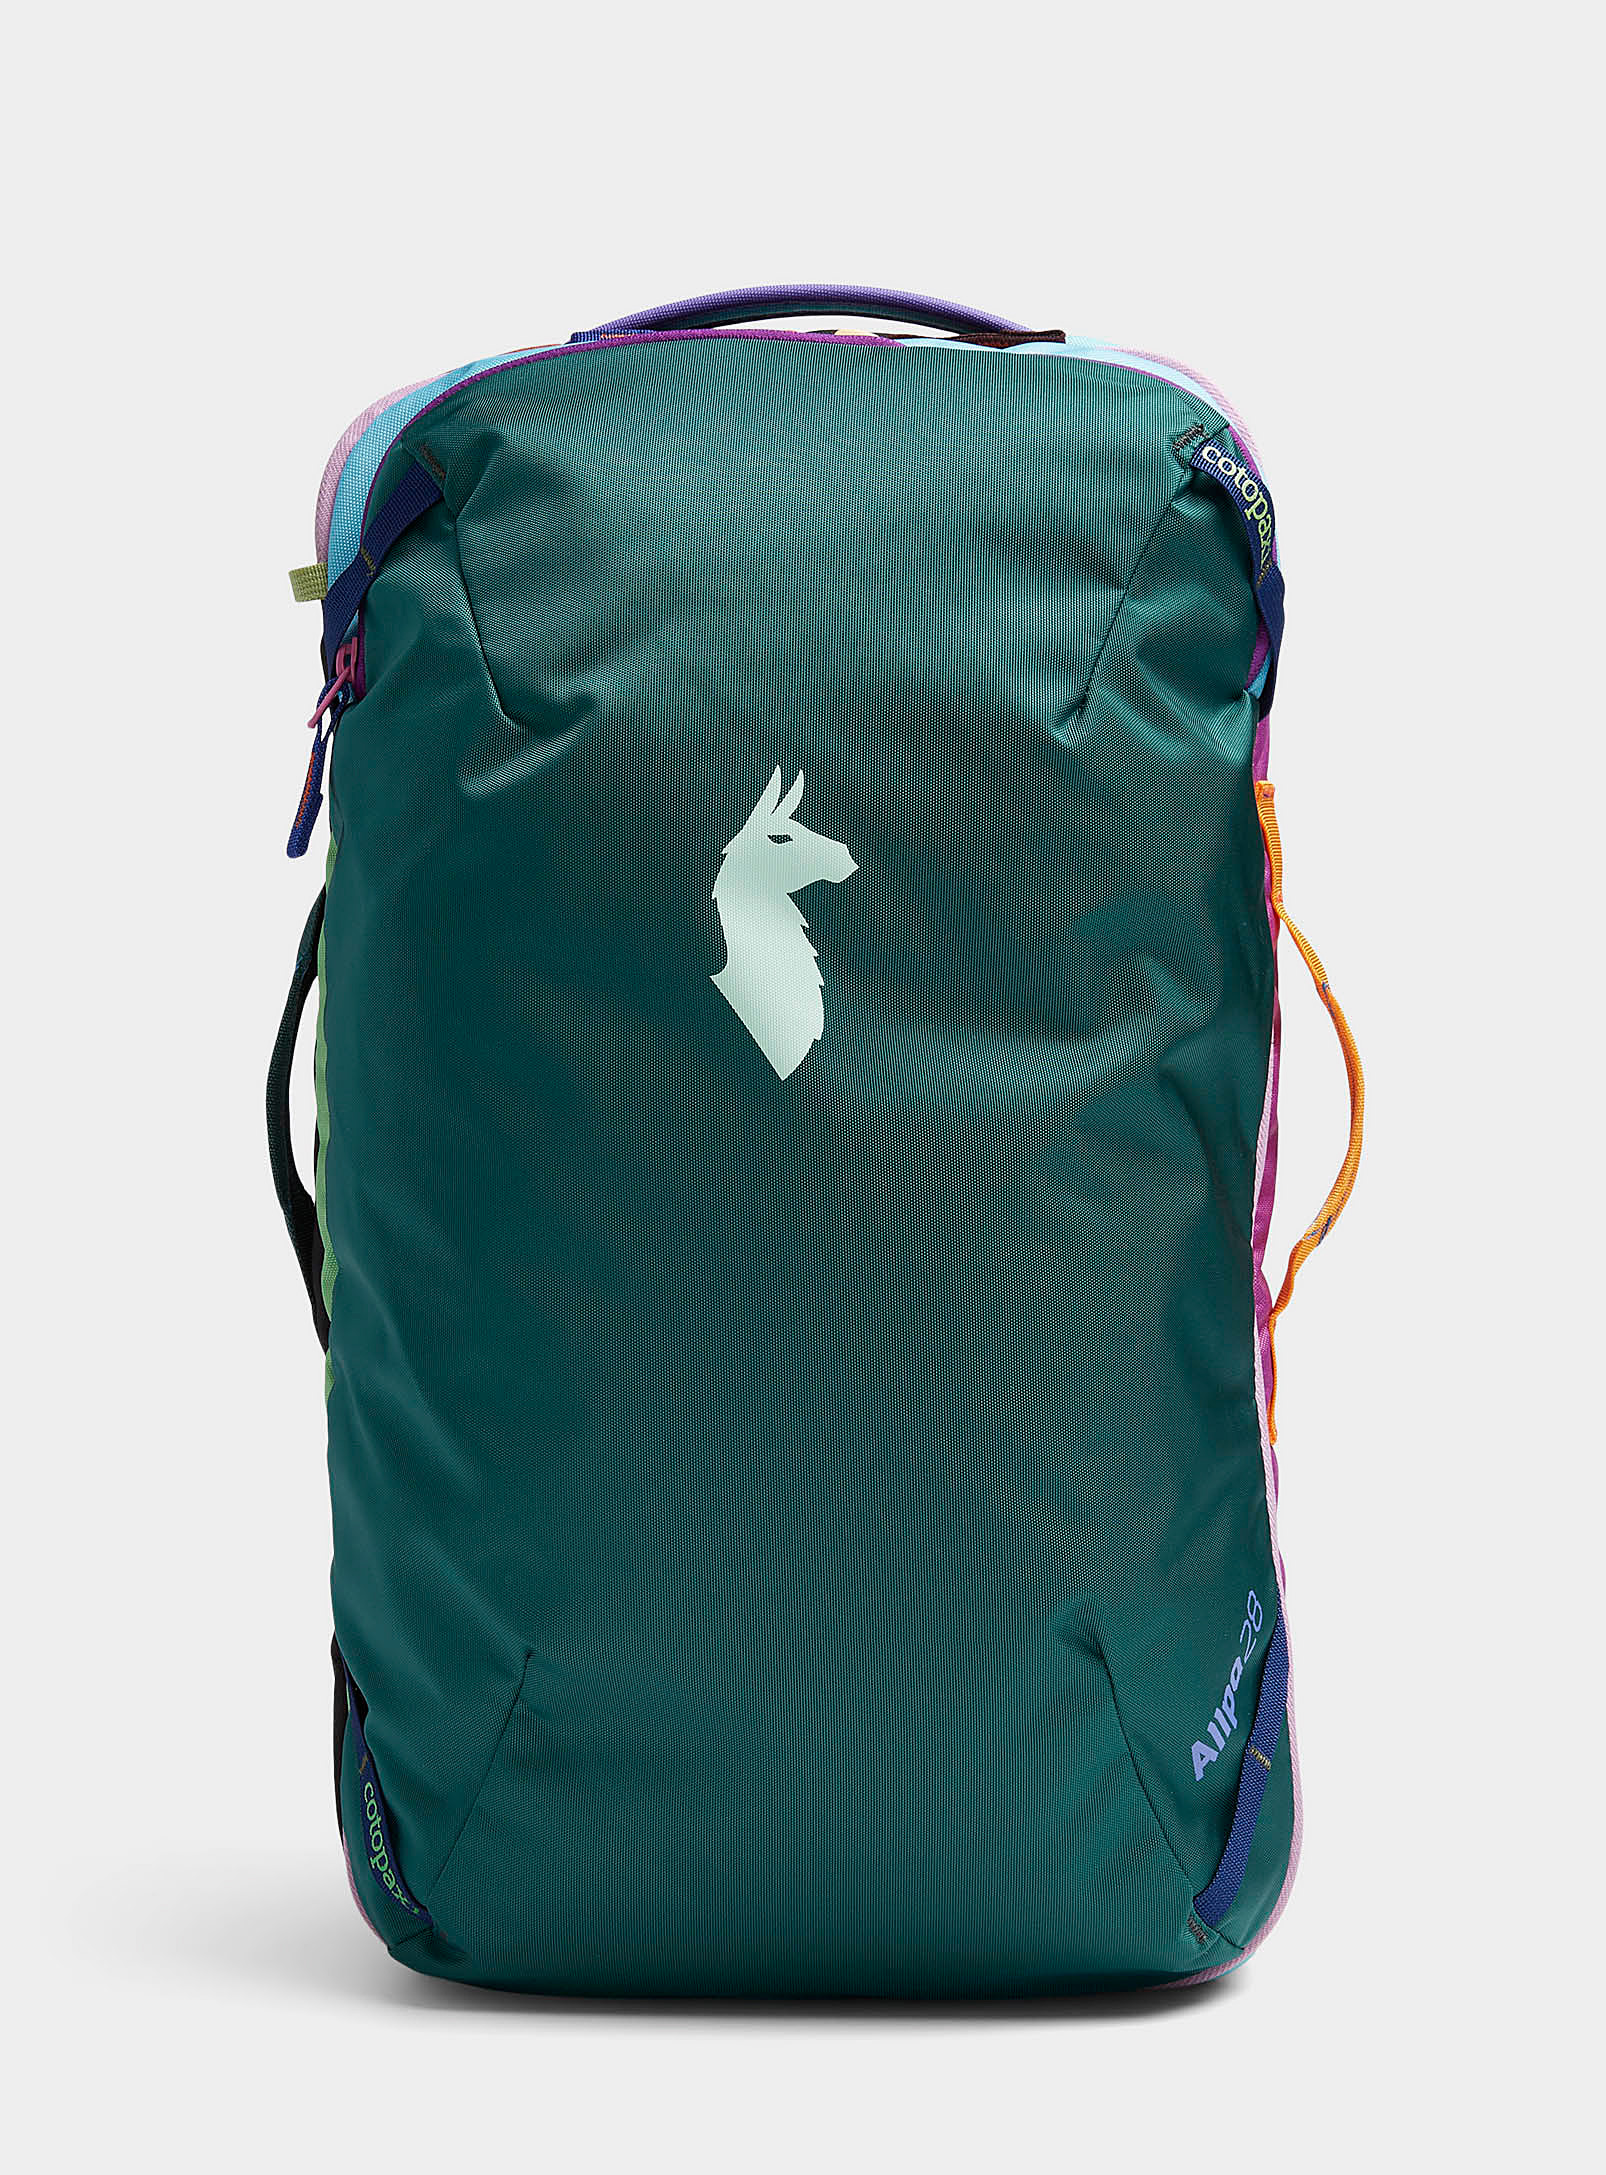 Cotopaxi Allpa 28l Travel Backpack In Patterned Crimson